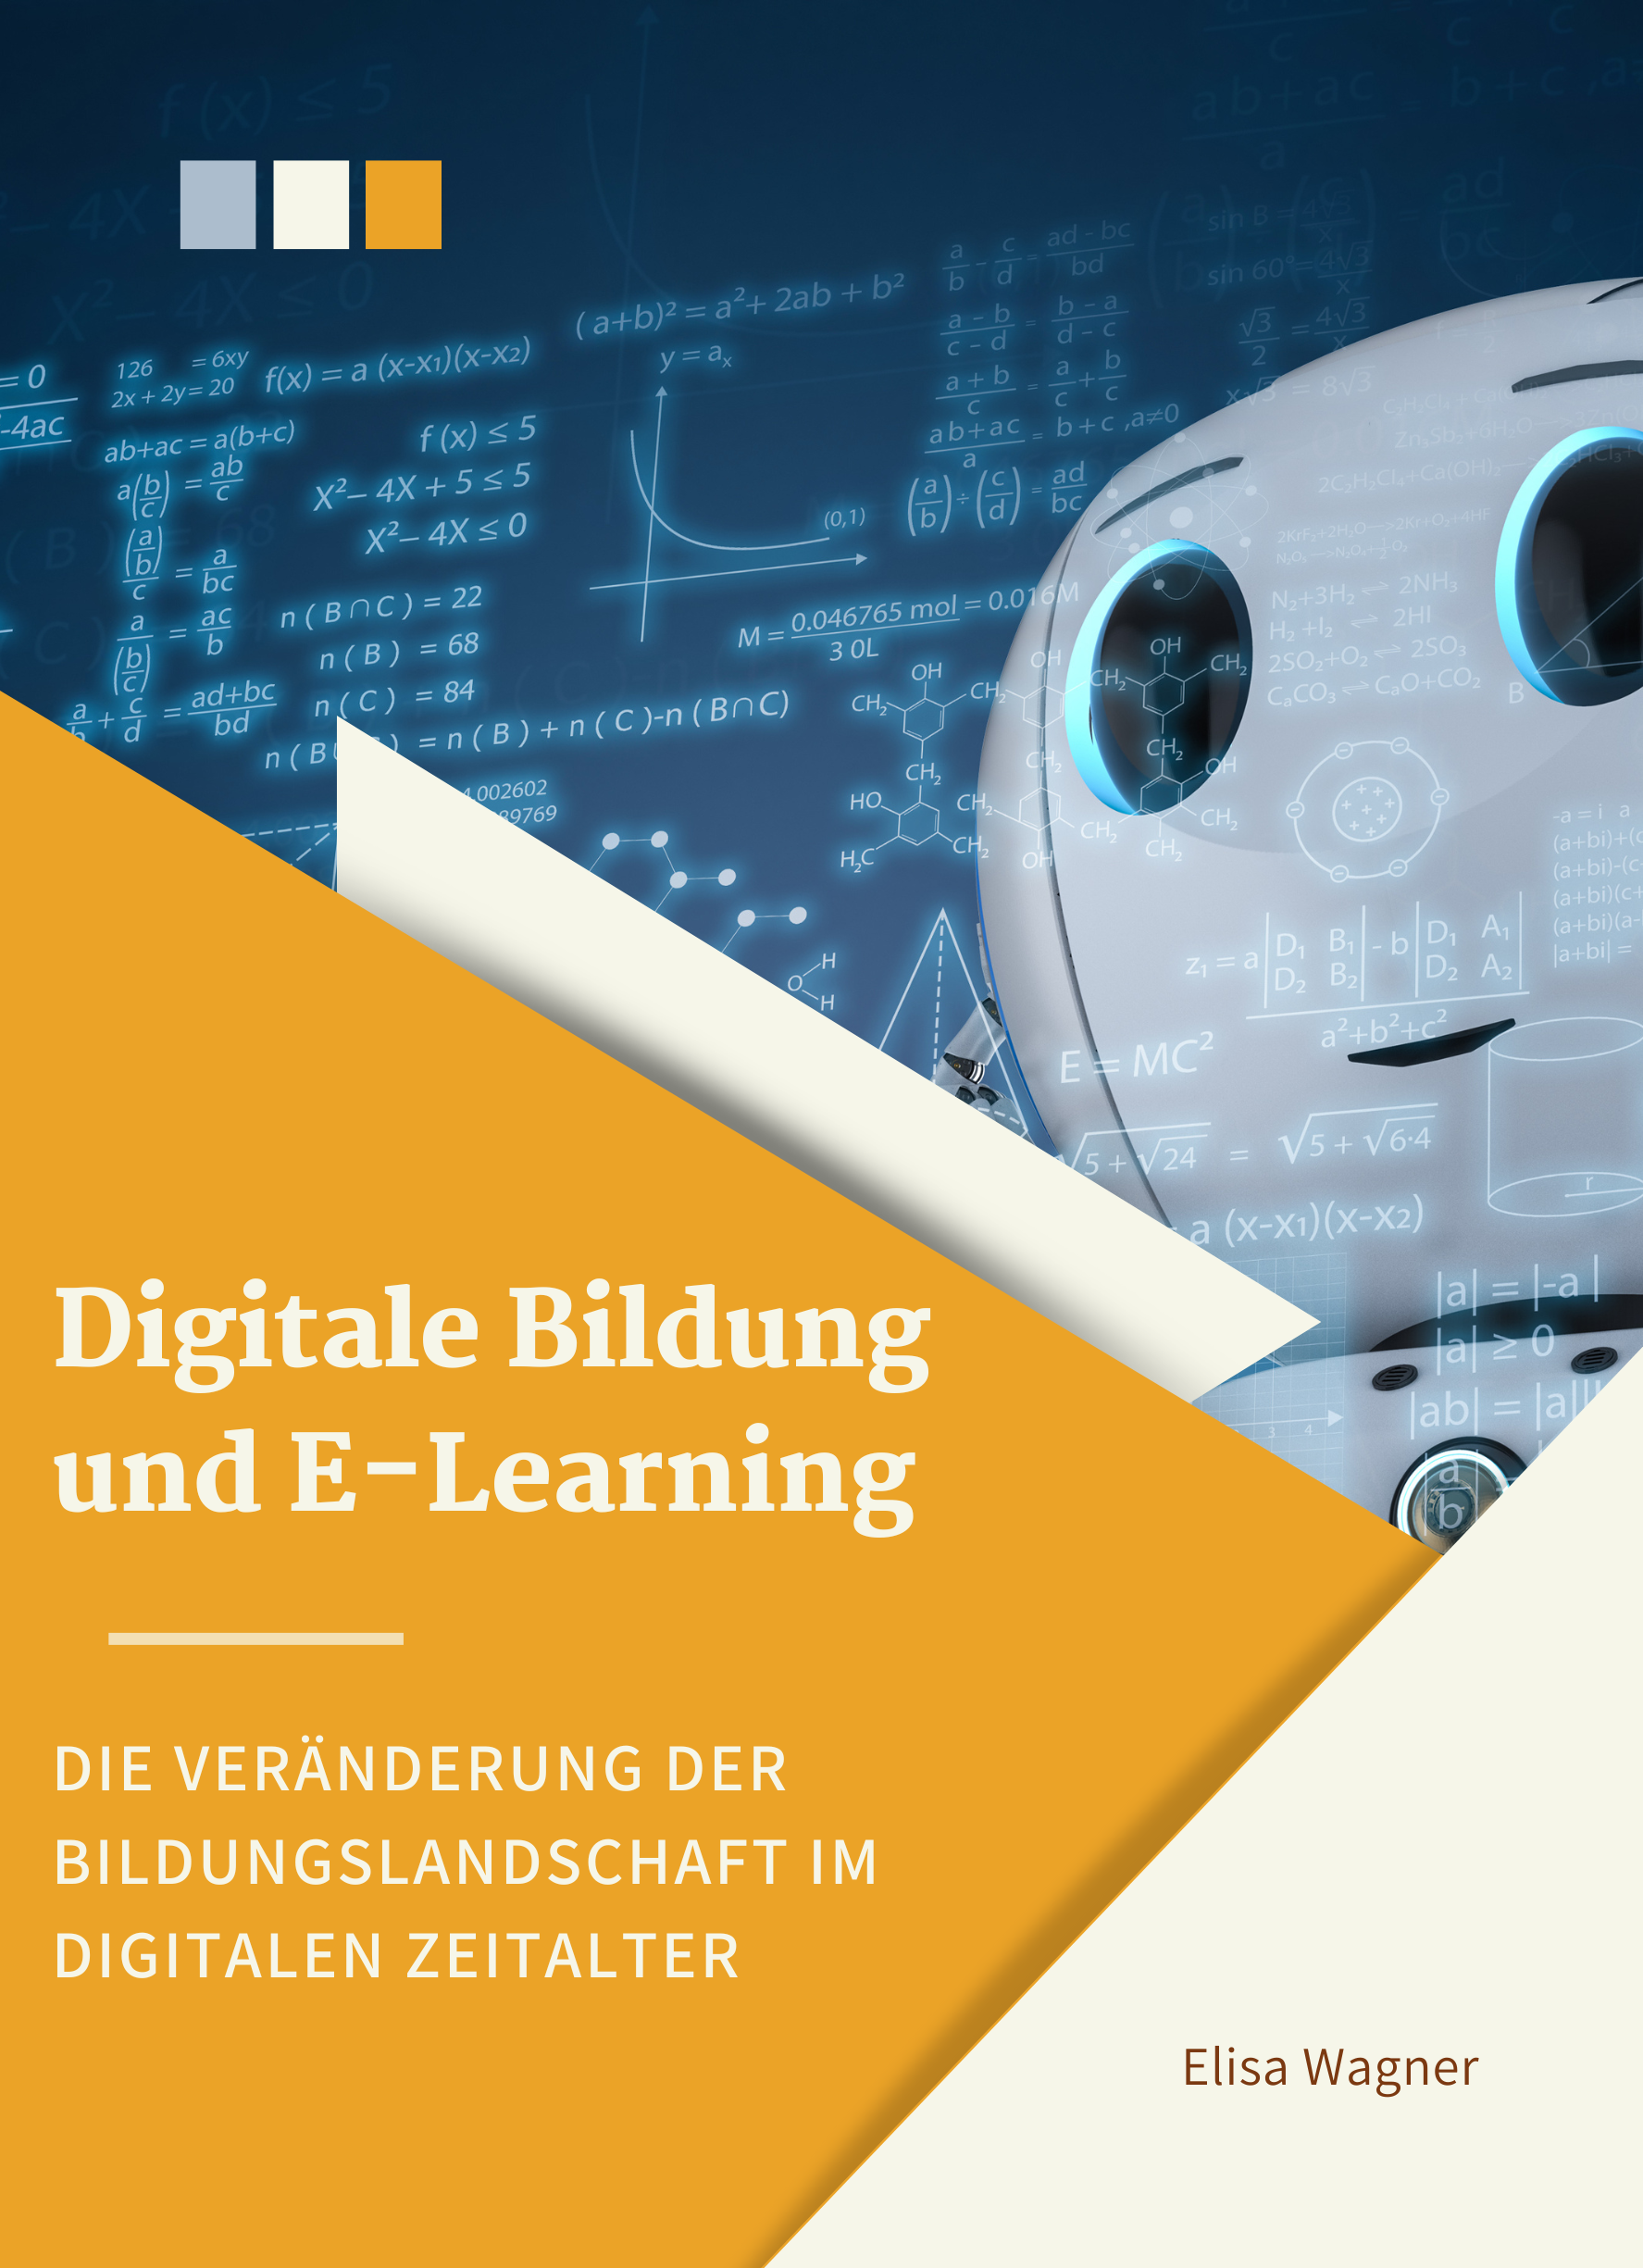 Digitale Bildung und E-Learning